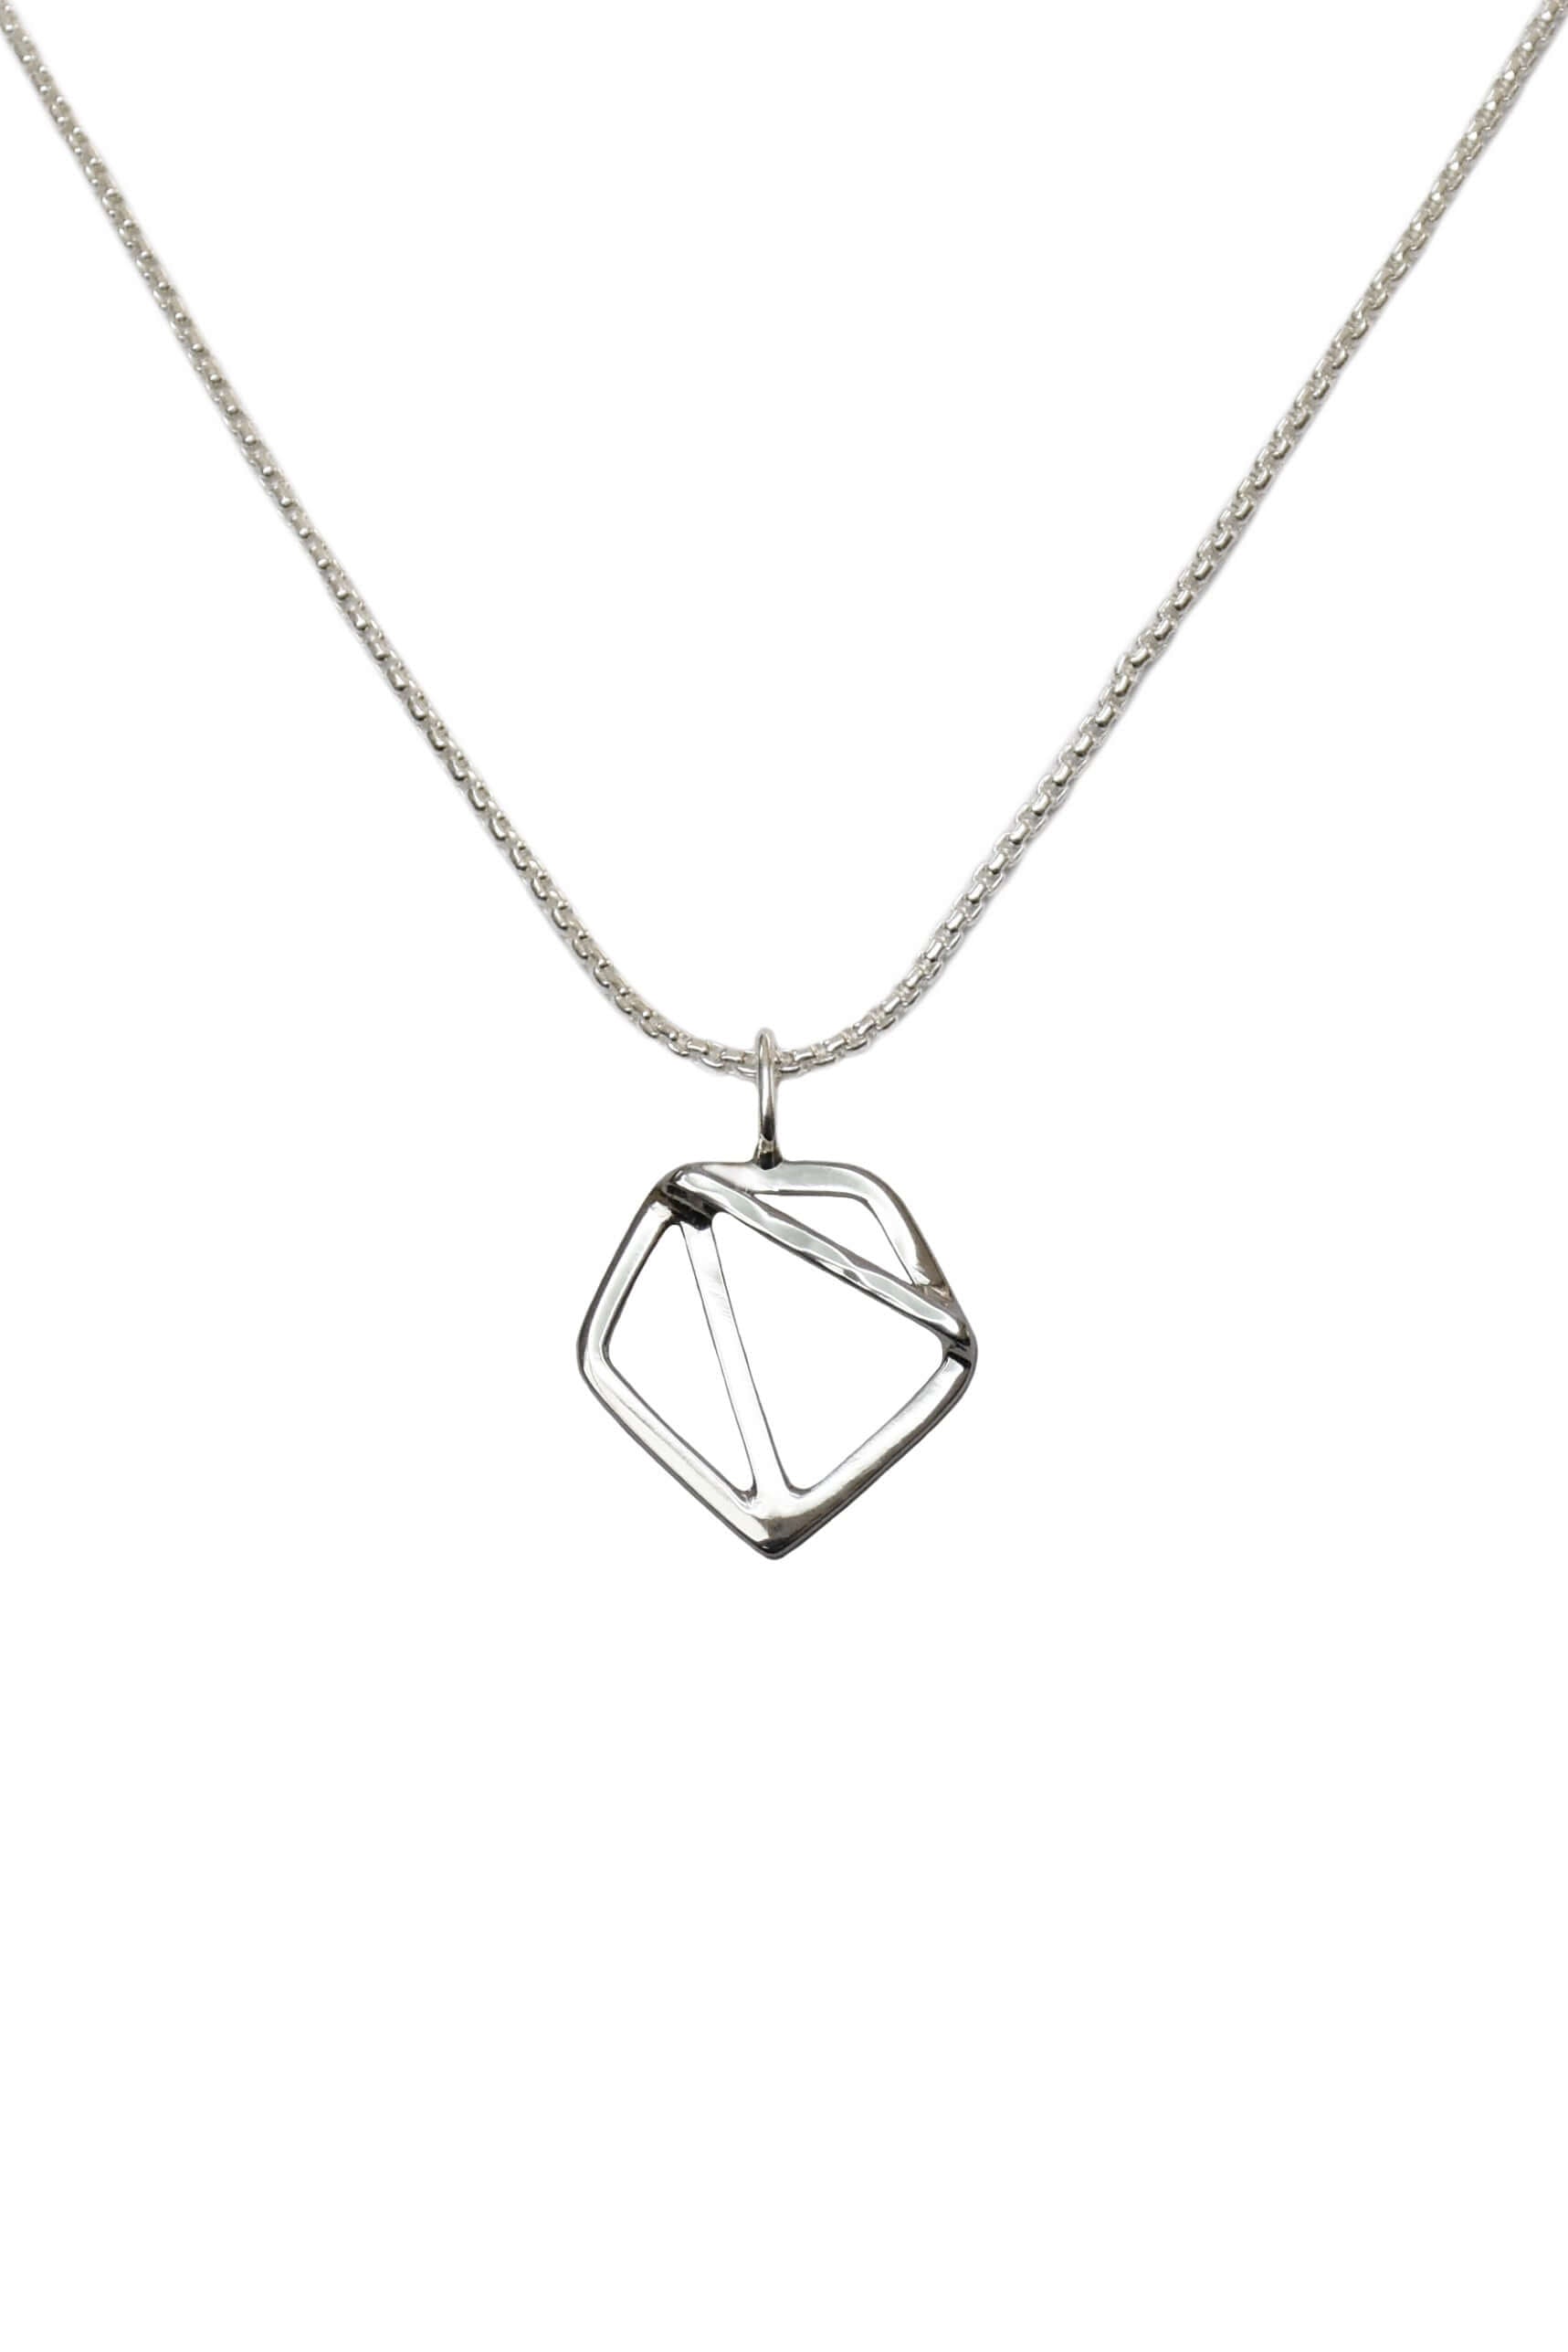 A mini handmade sterling silver pentagon pendant on a silver chain